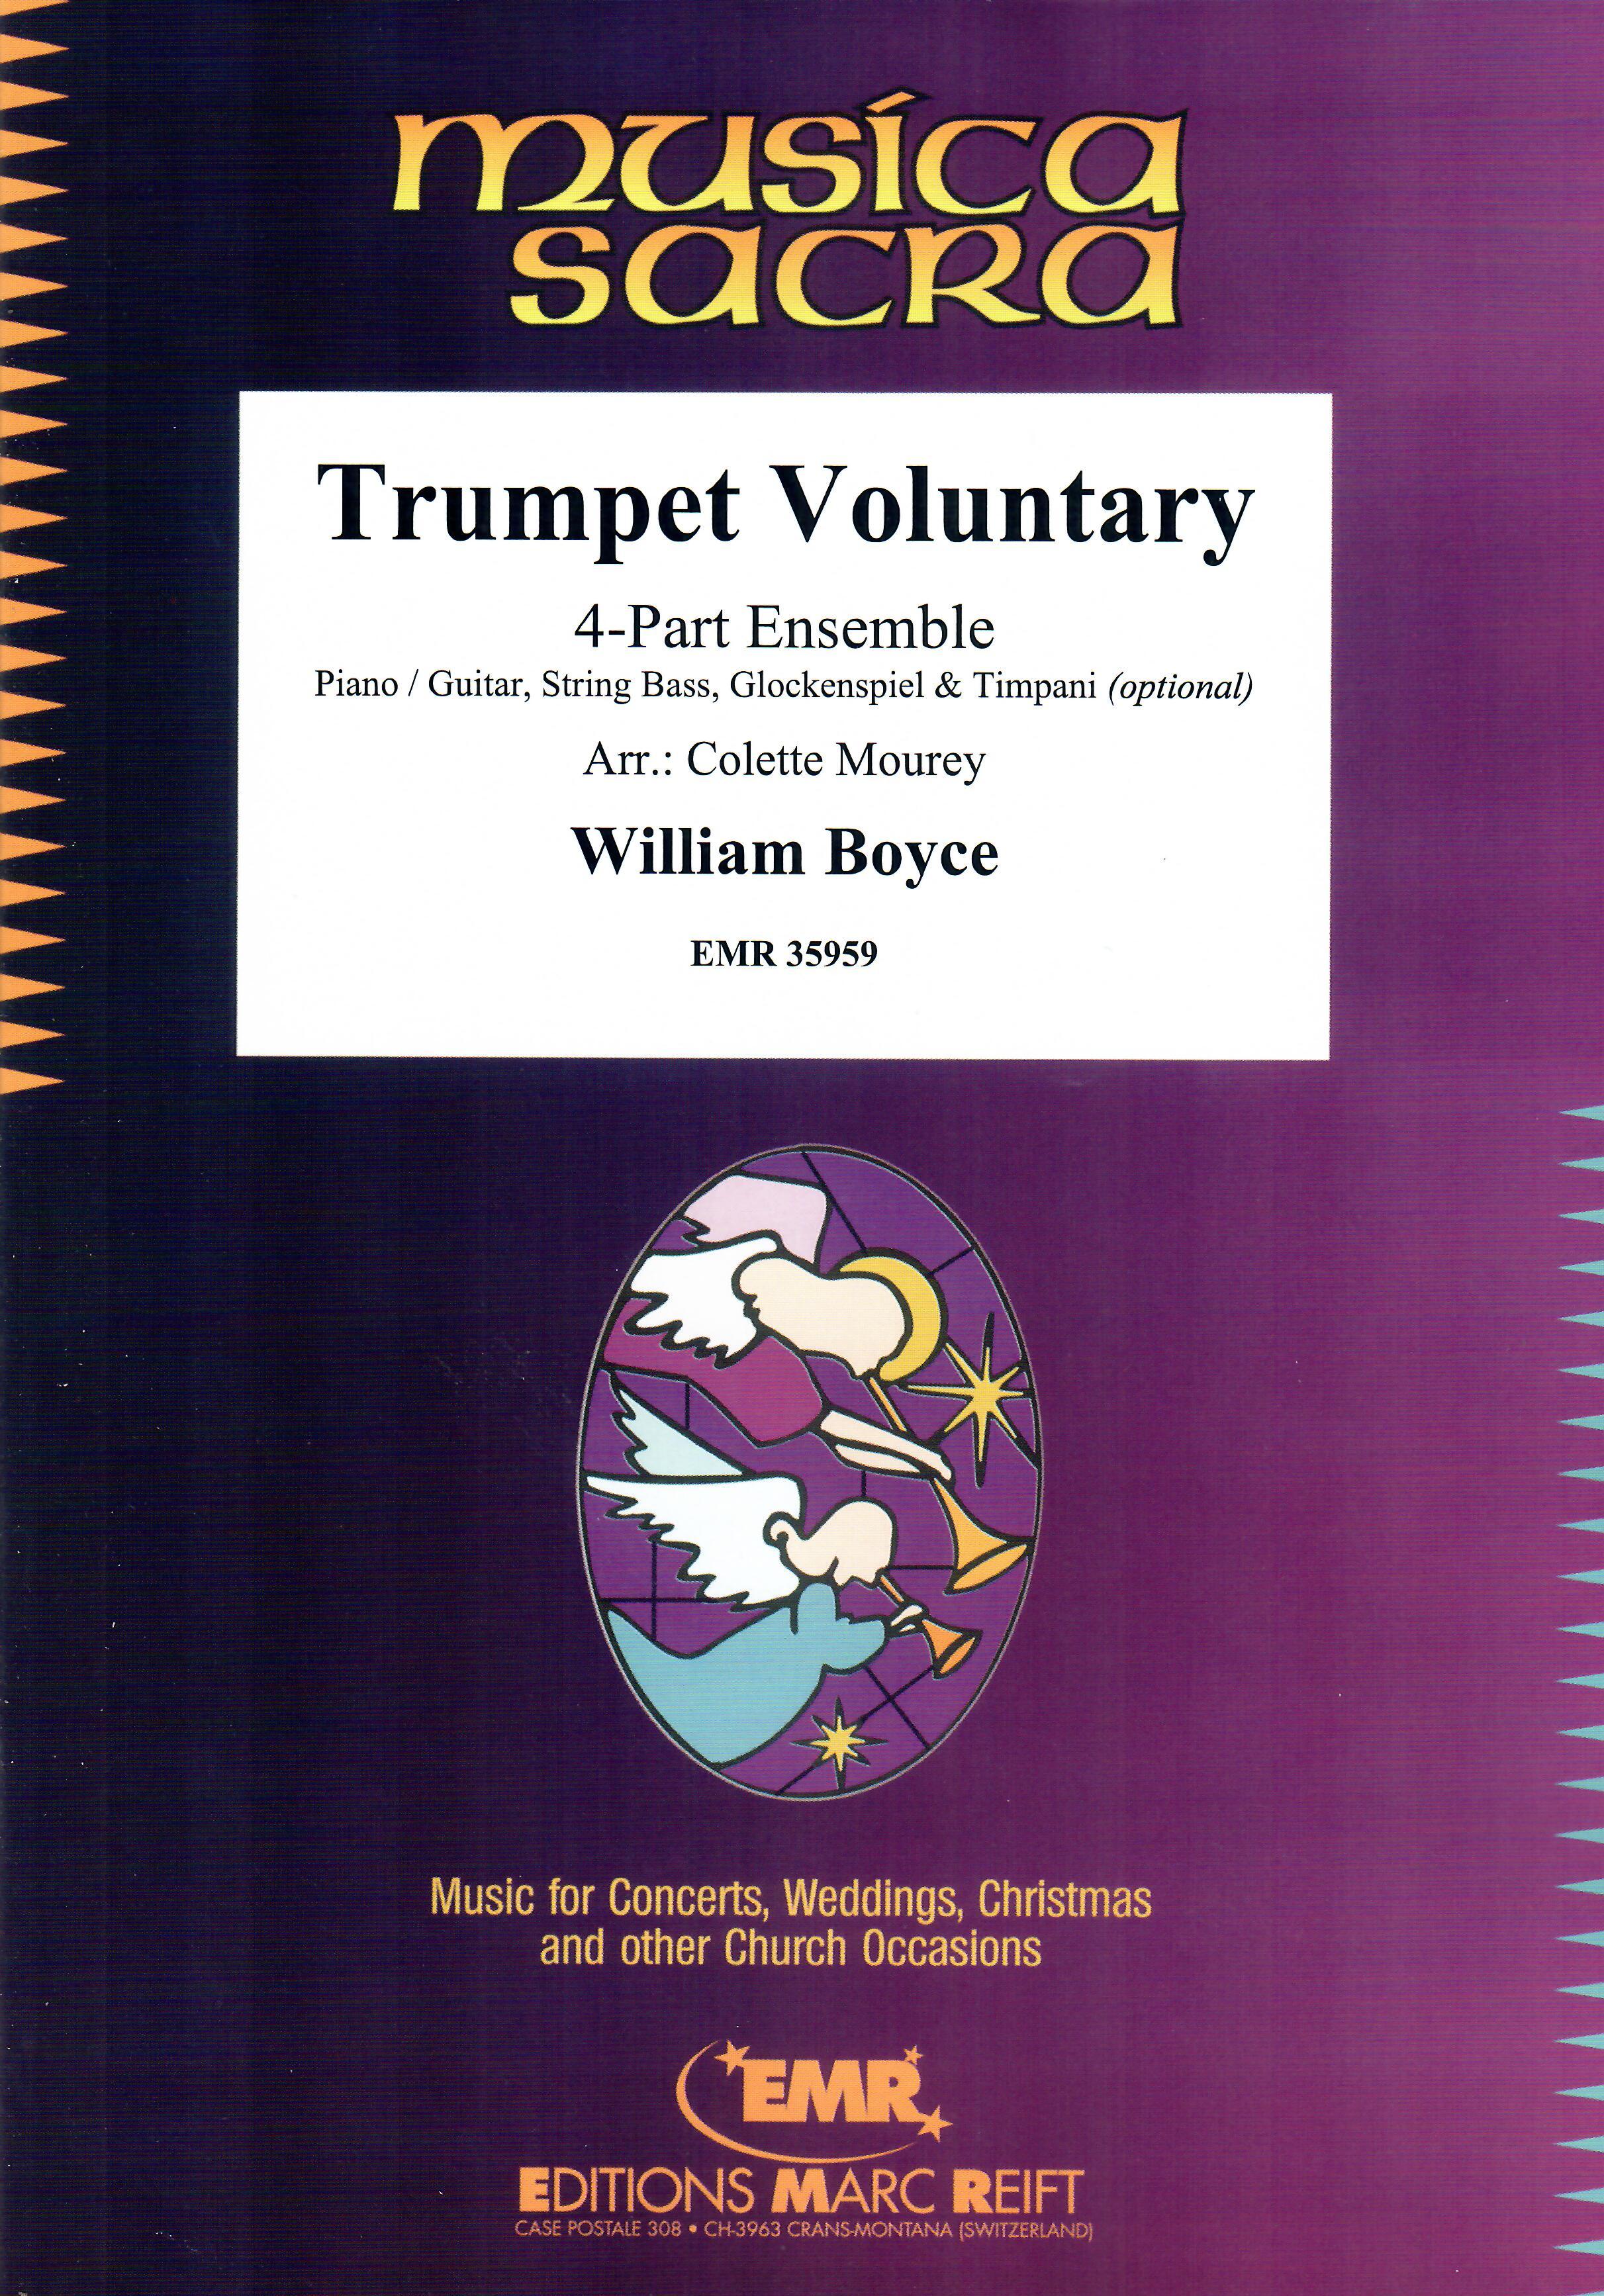 TRUMPET VOLUNTARY, EMR Flexi - Band